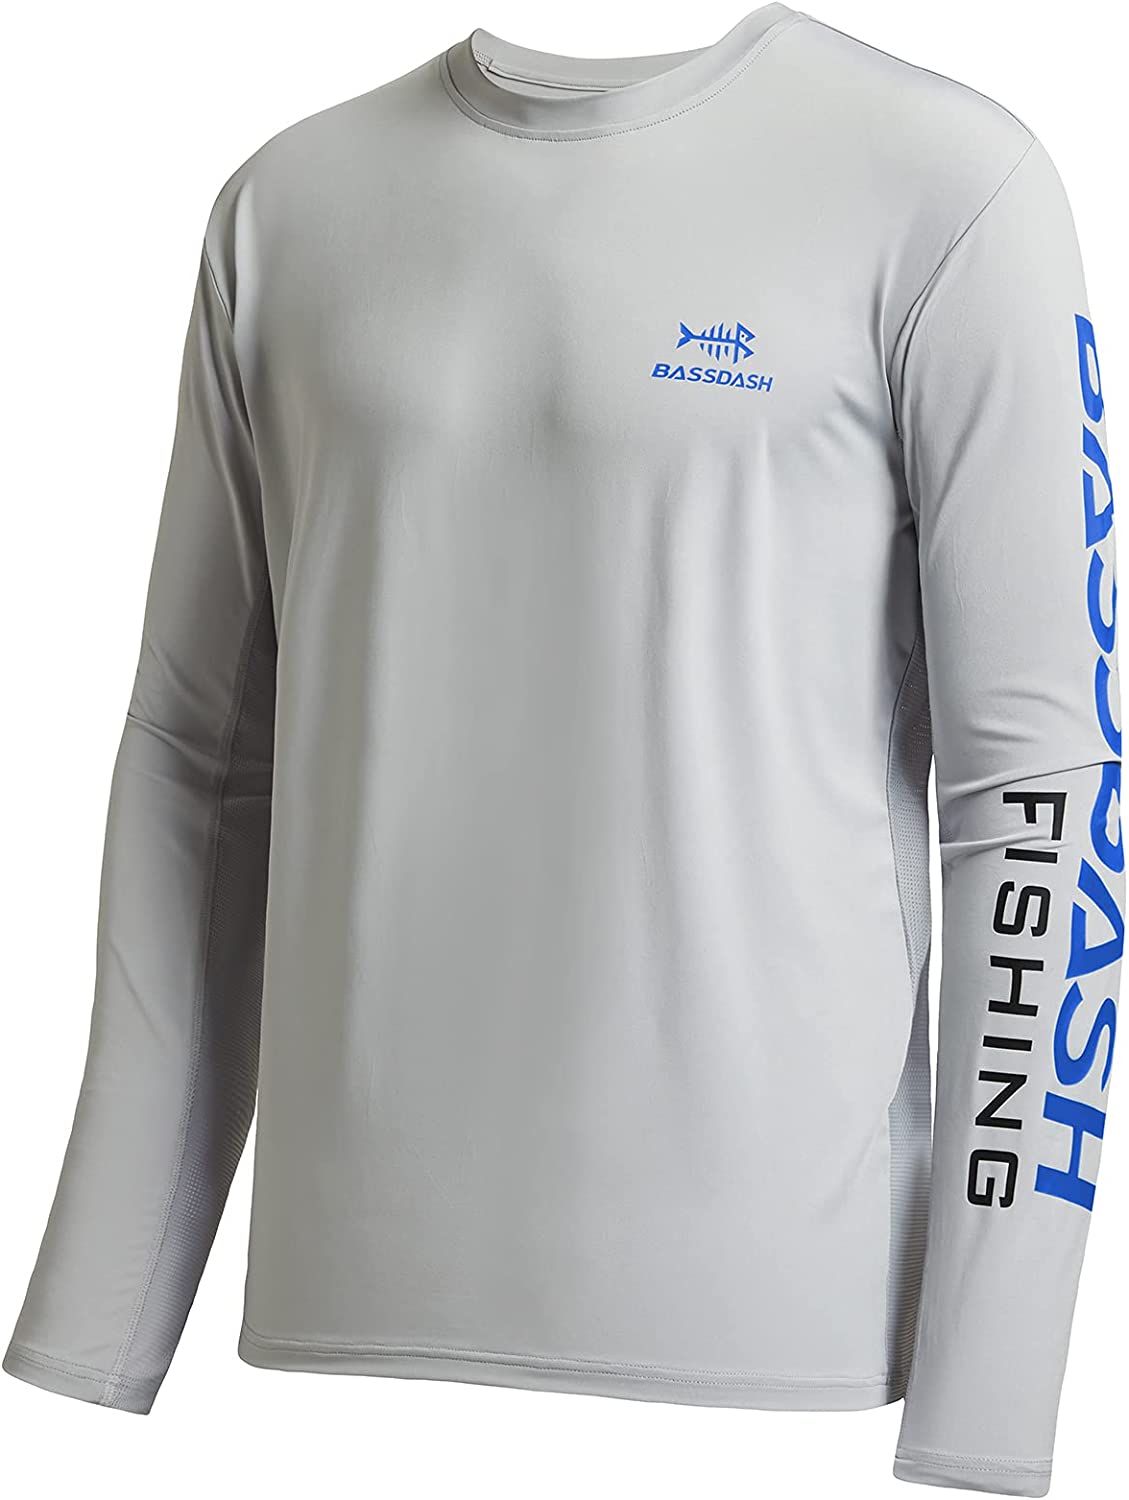 Bassdass Fly Fishing Shirt Long Sleeve Men Sun UV Protection